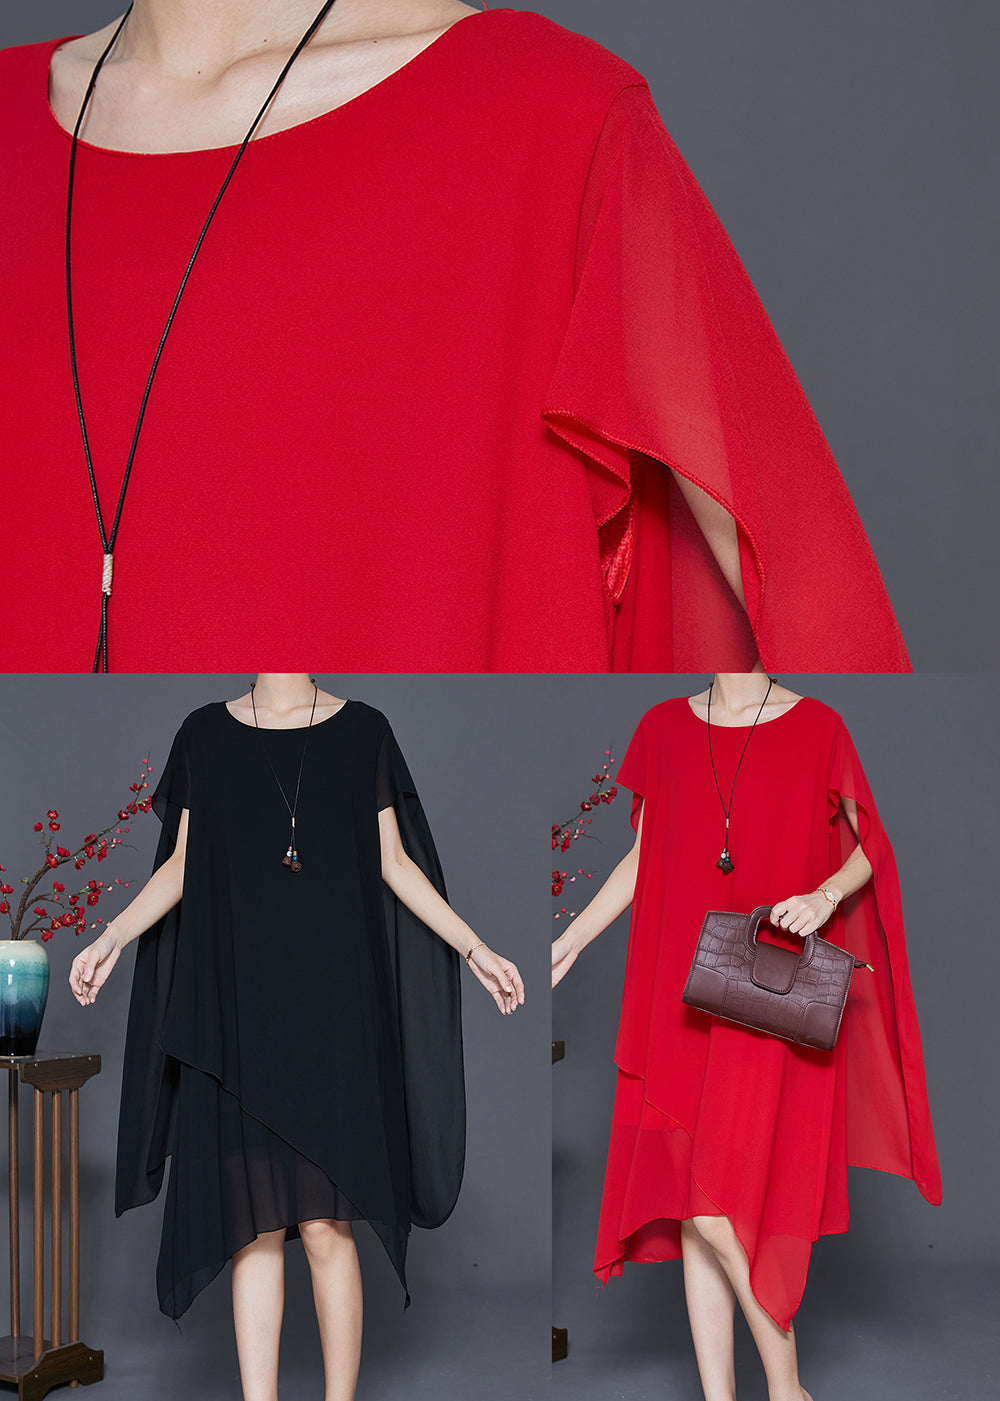 Handmade Black Asymmetrical Design Chiffon Maxi Dresses Summer